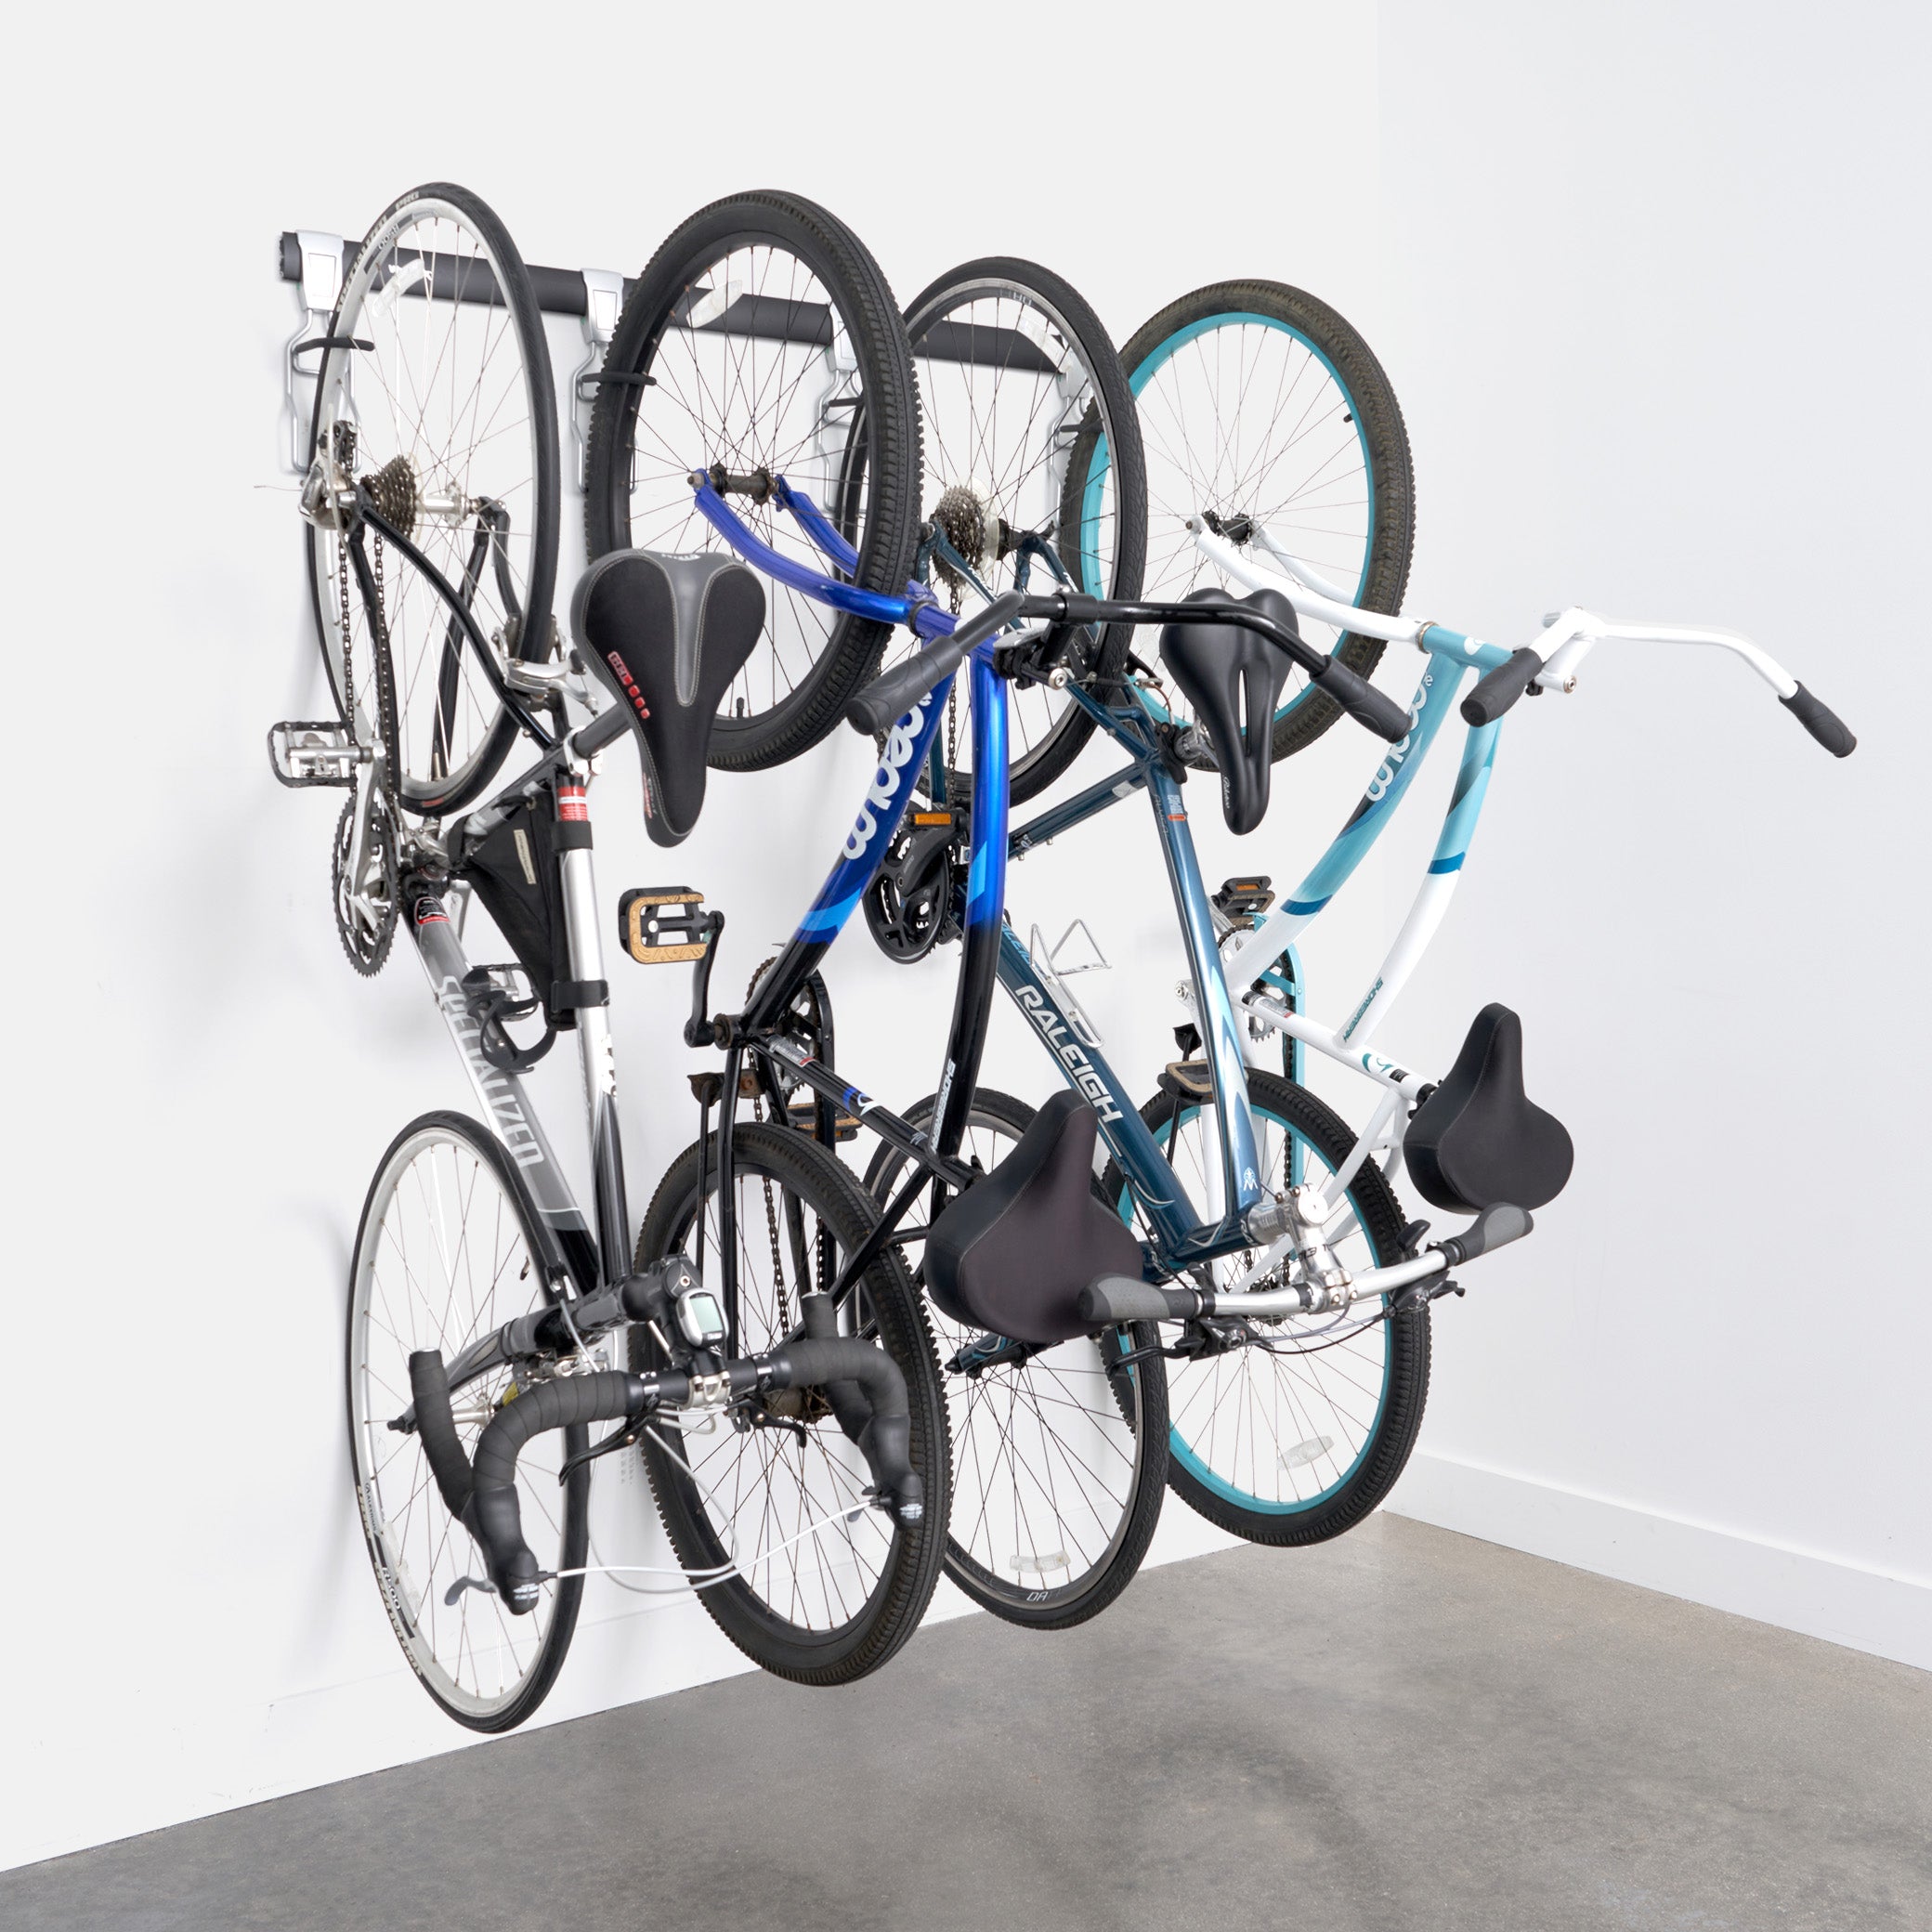 SafeRacks Garage Track Systems for Bike Storage